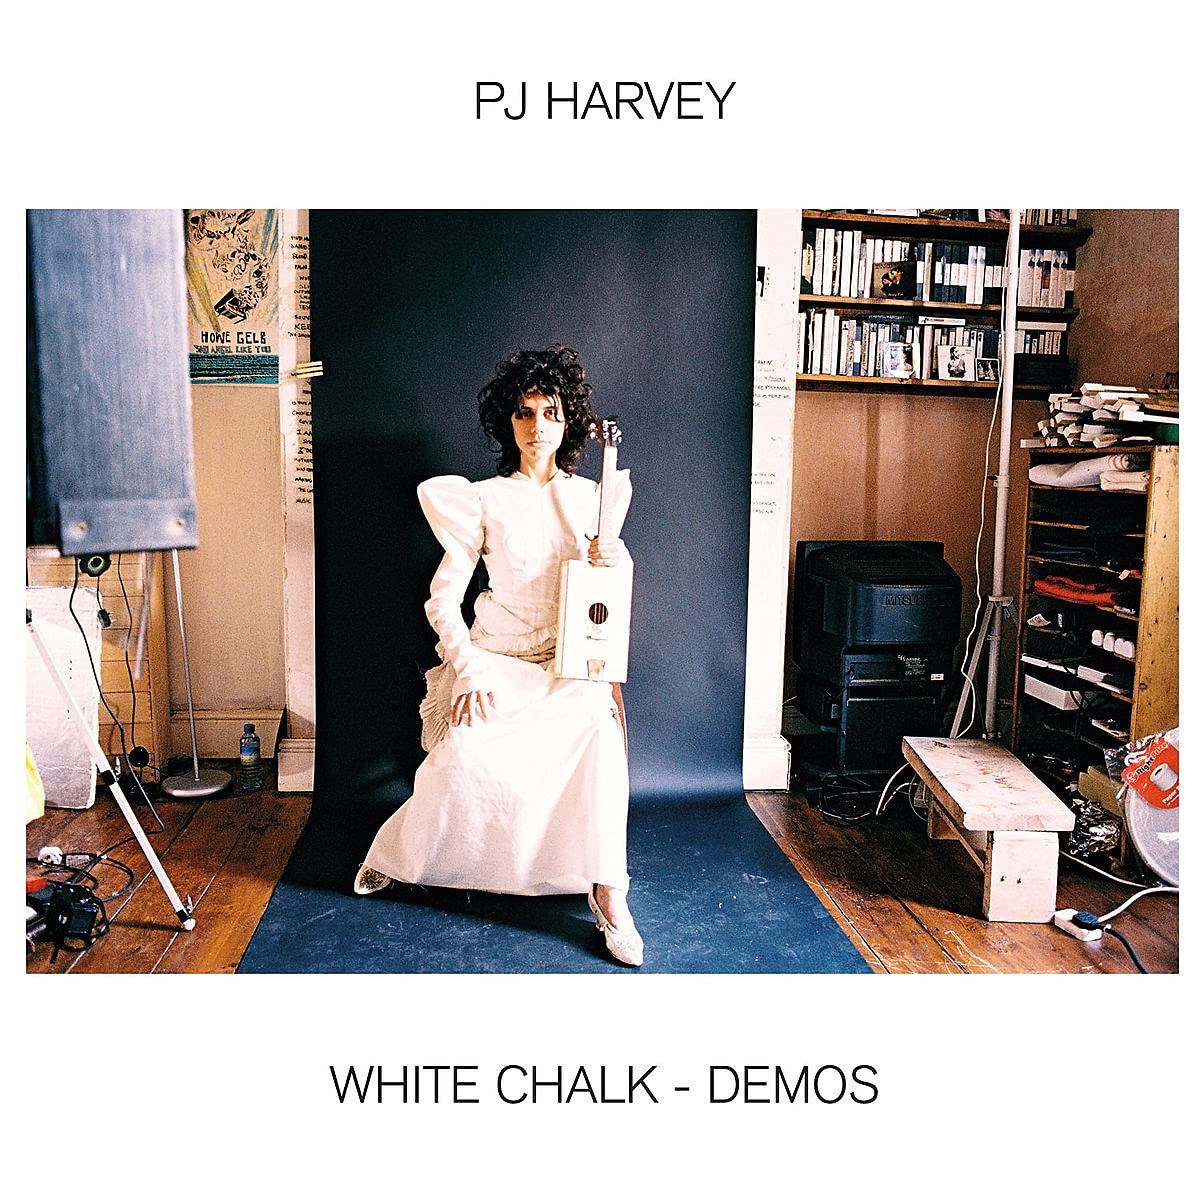 PJ HARVEY - White Chalk Demos LP